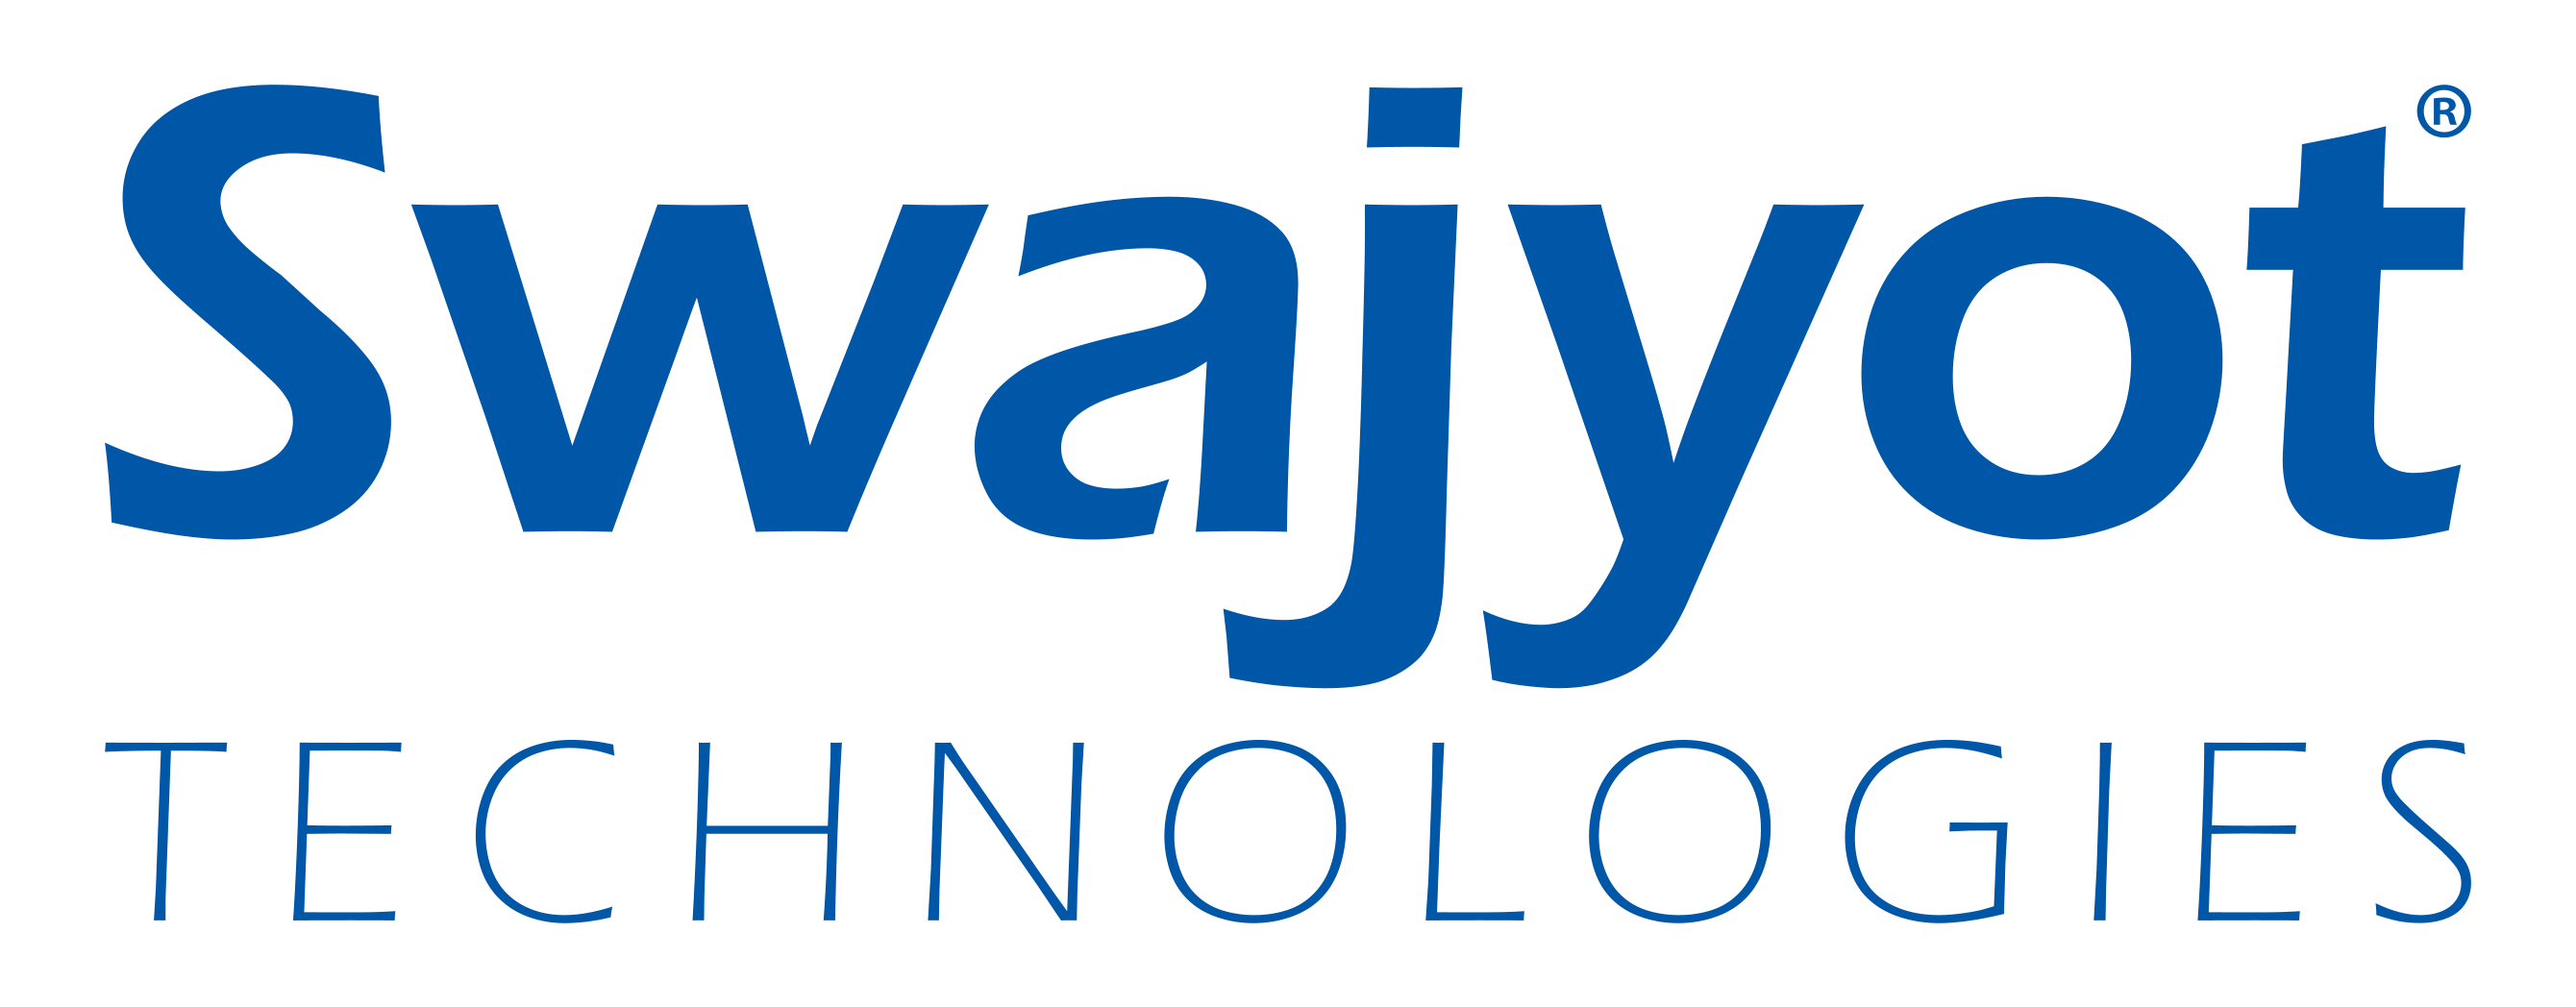 Swajyot Technologies